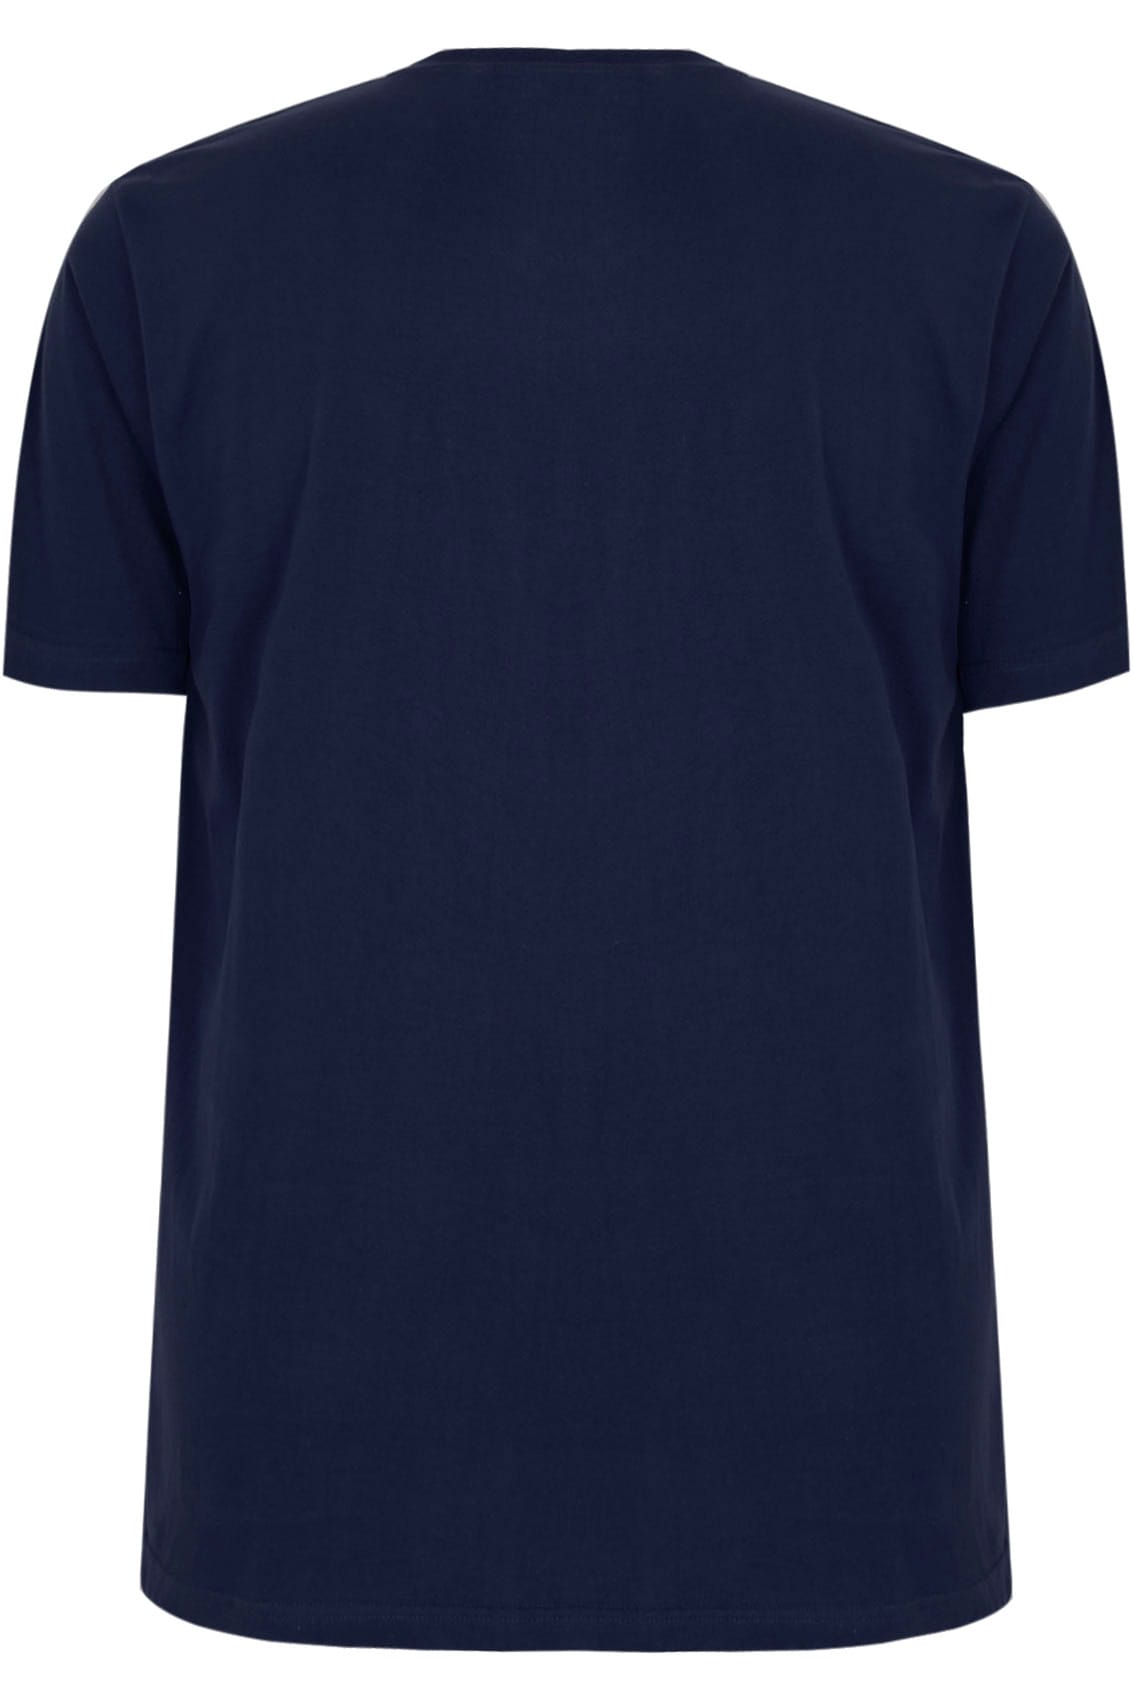 BadRhino Navy Basic Plain V-Neck T-Shirt Extra large sizes M,L,XL,2XL ...